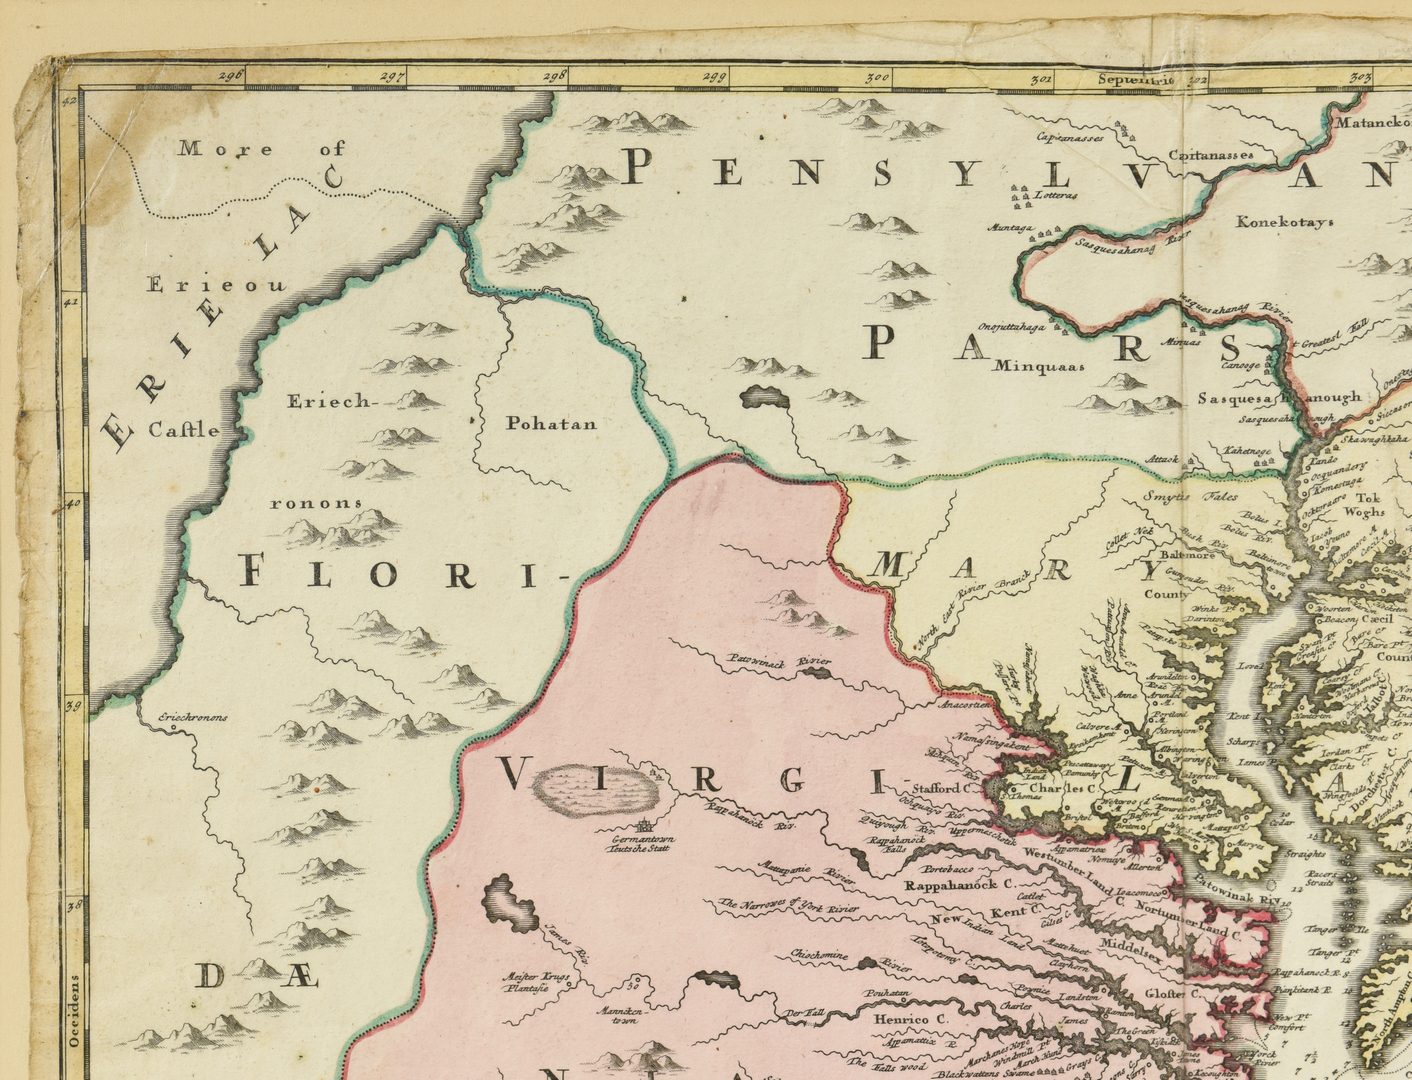 Lot 267: Johann Baptist Homann map of Virginia, Maryland, and Carolina, 1714